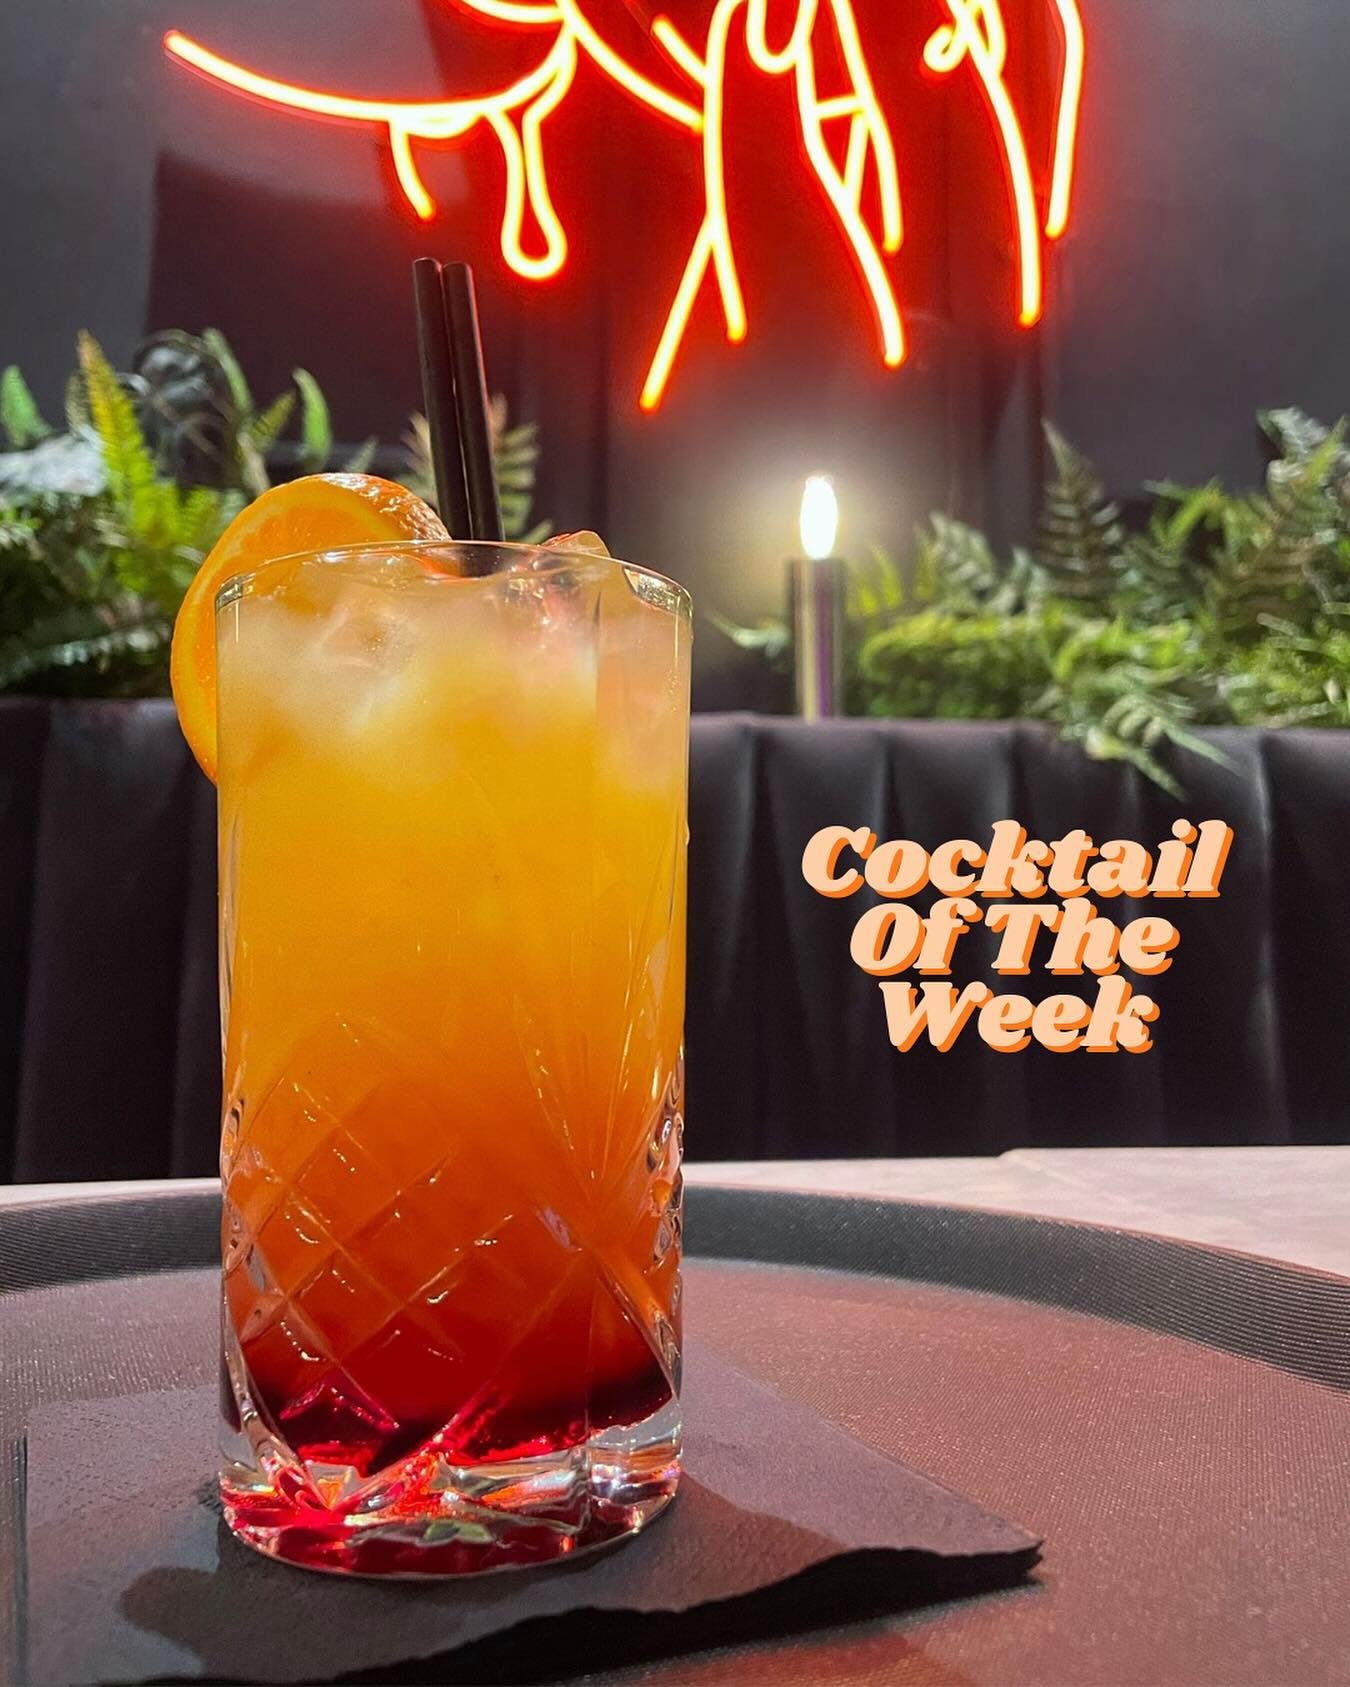 COCKTAIL OF THE WEEK - TEQUILA SUNRISE

Tequila, Cointreau, OJ, Grenadine lemon juice

#cocktailoftheweek #cocktails #tequila